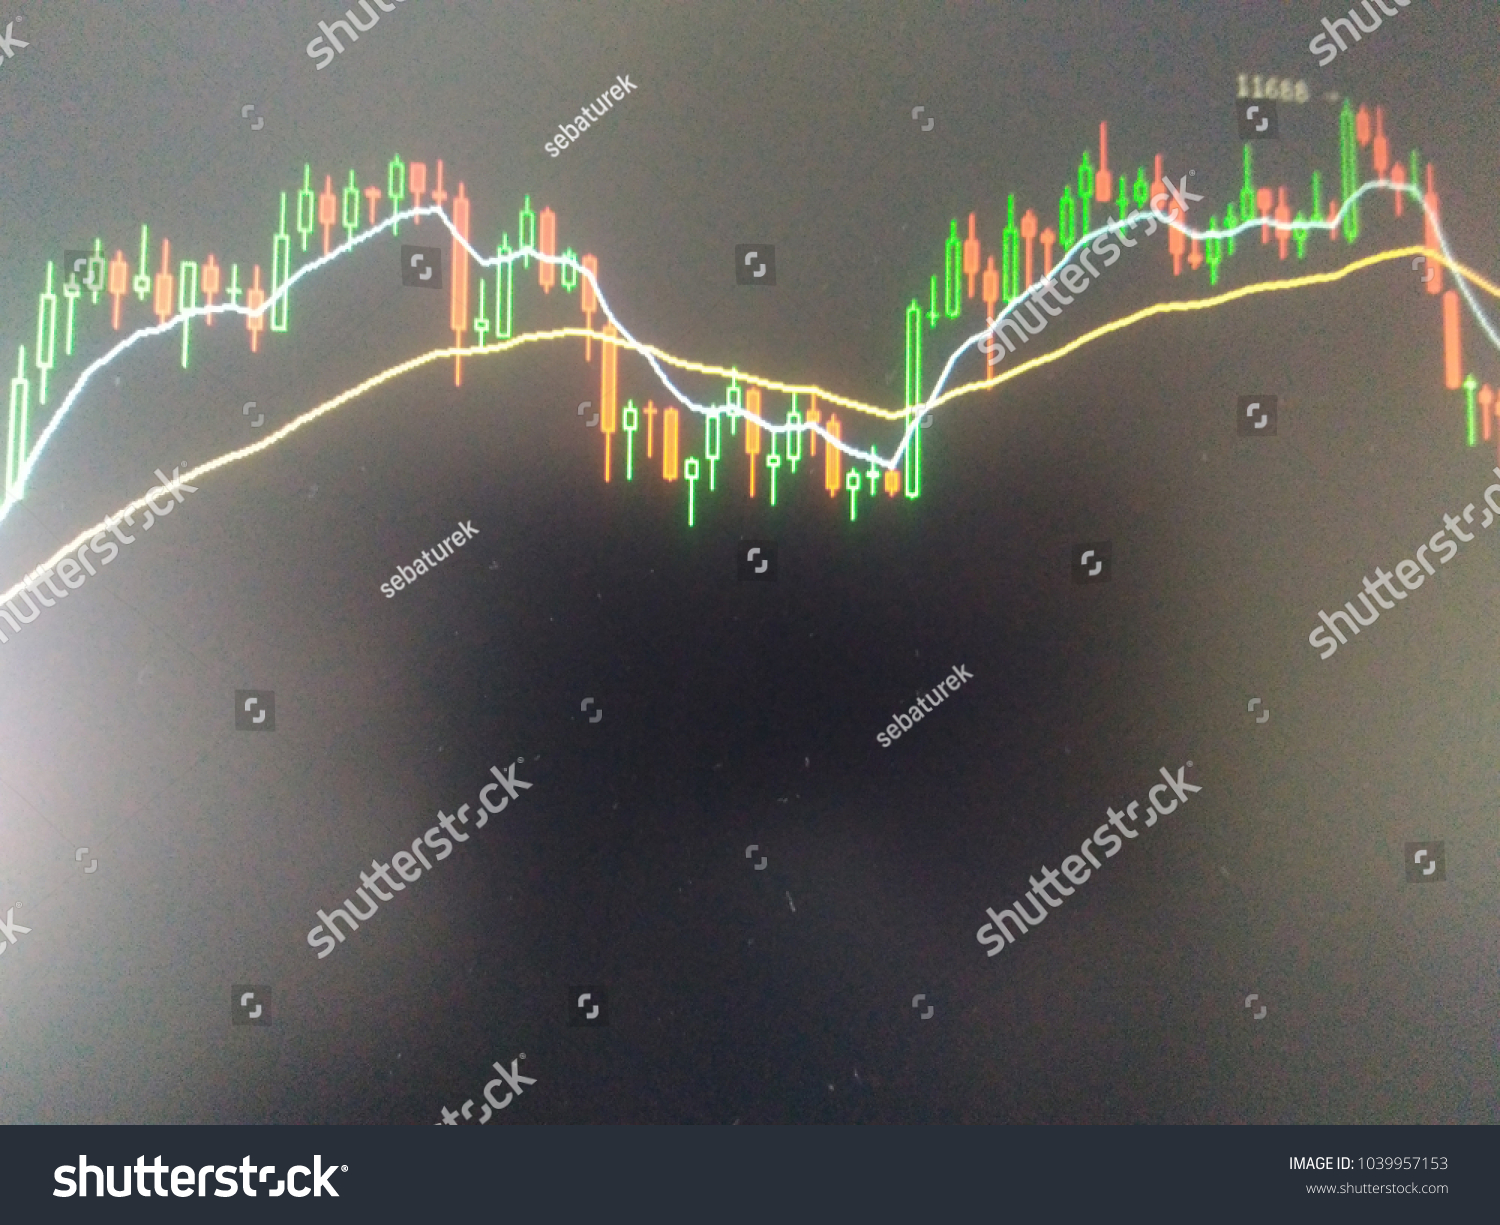 Forex Chart Analysis Data Stock Photo Edit Now 1039957153 - 